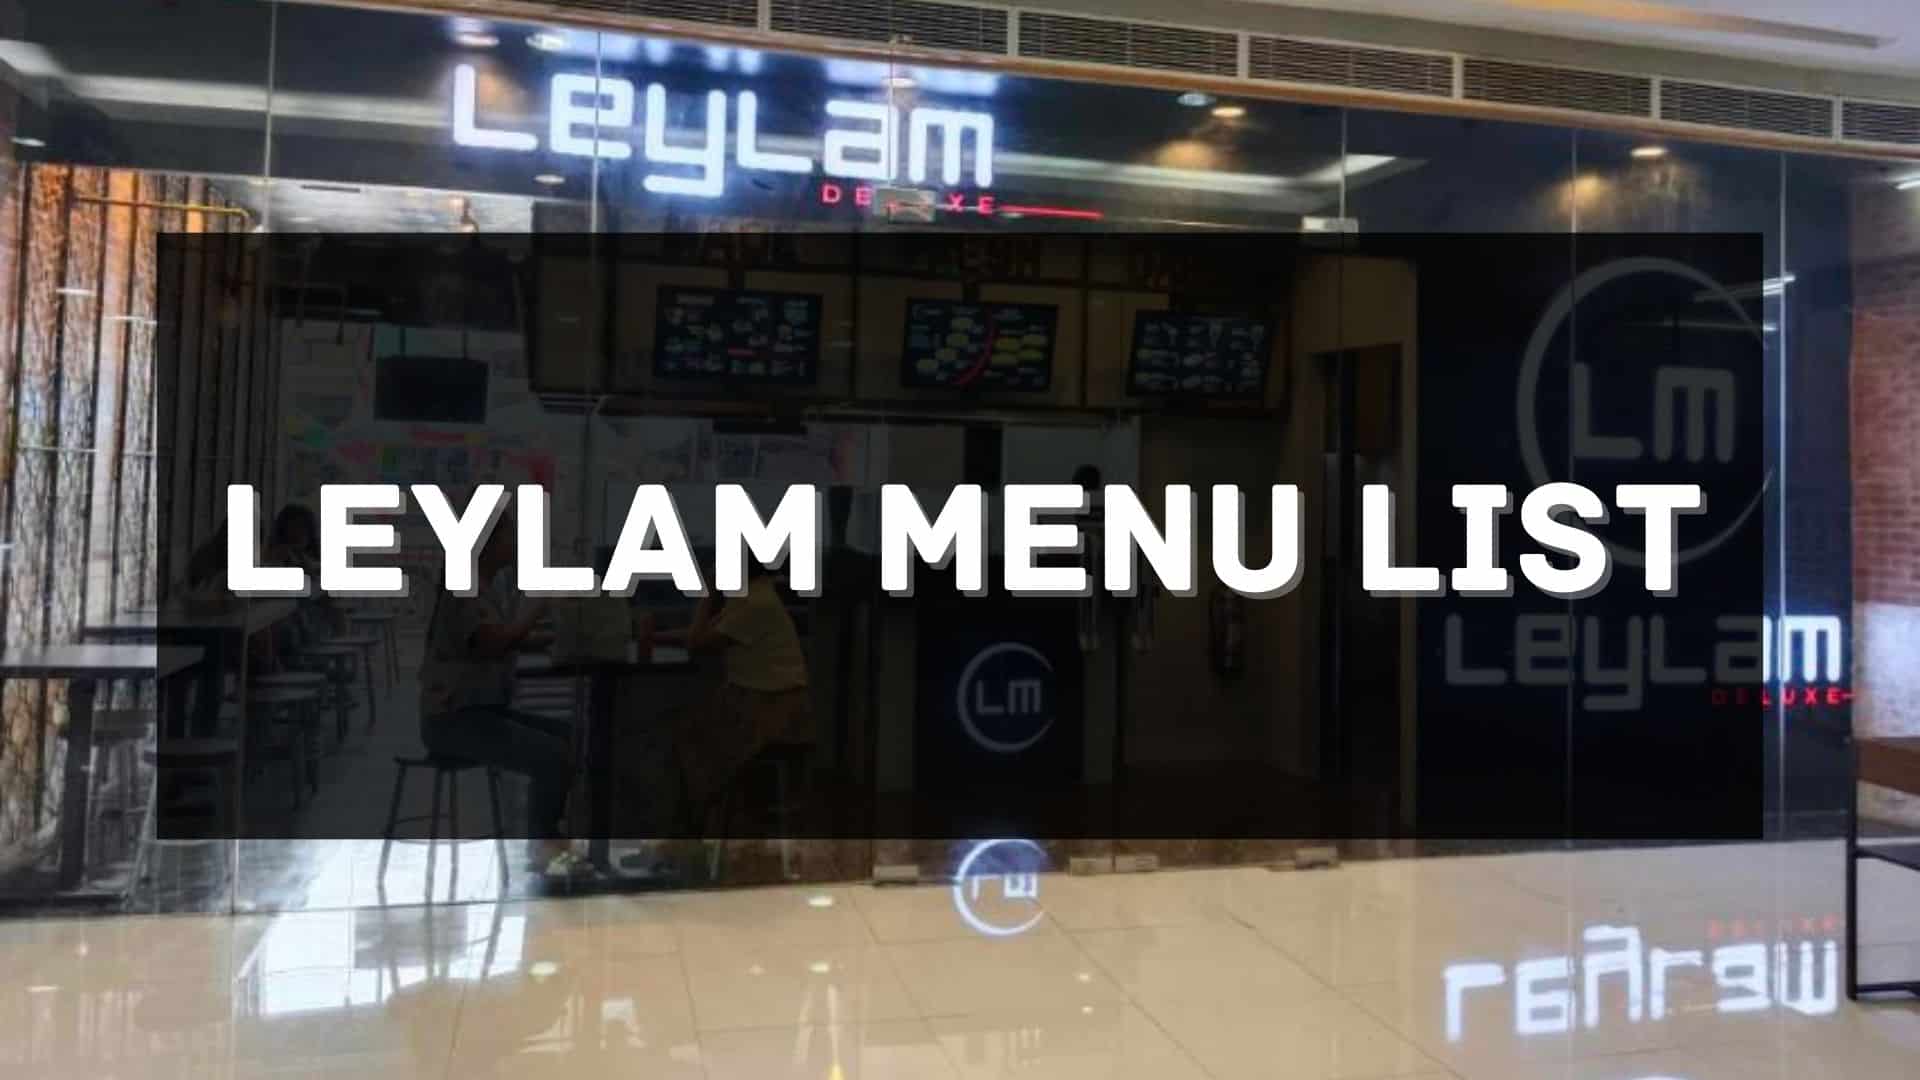 leylam shawarma menu prices philippines